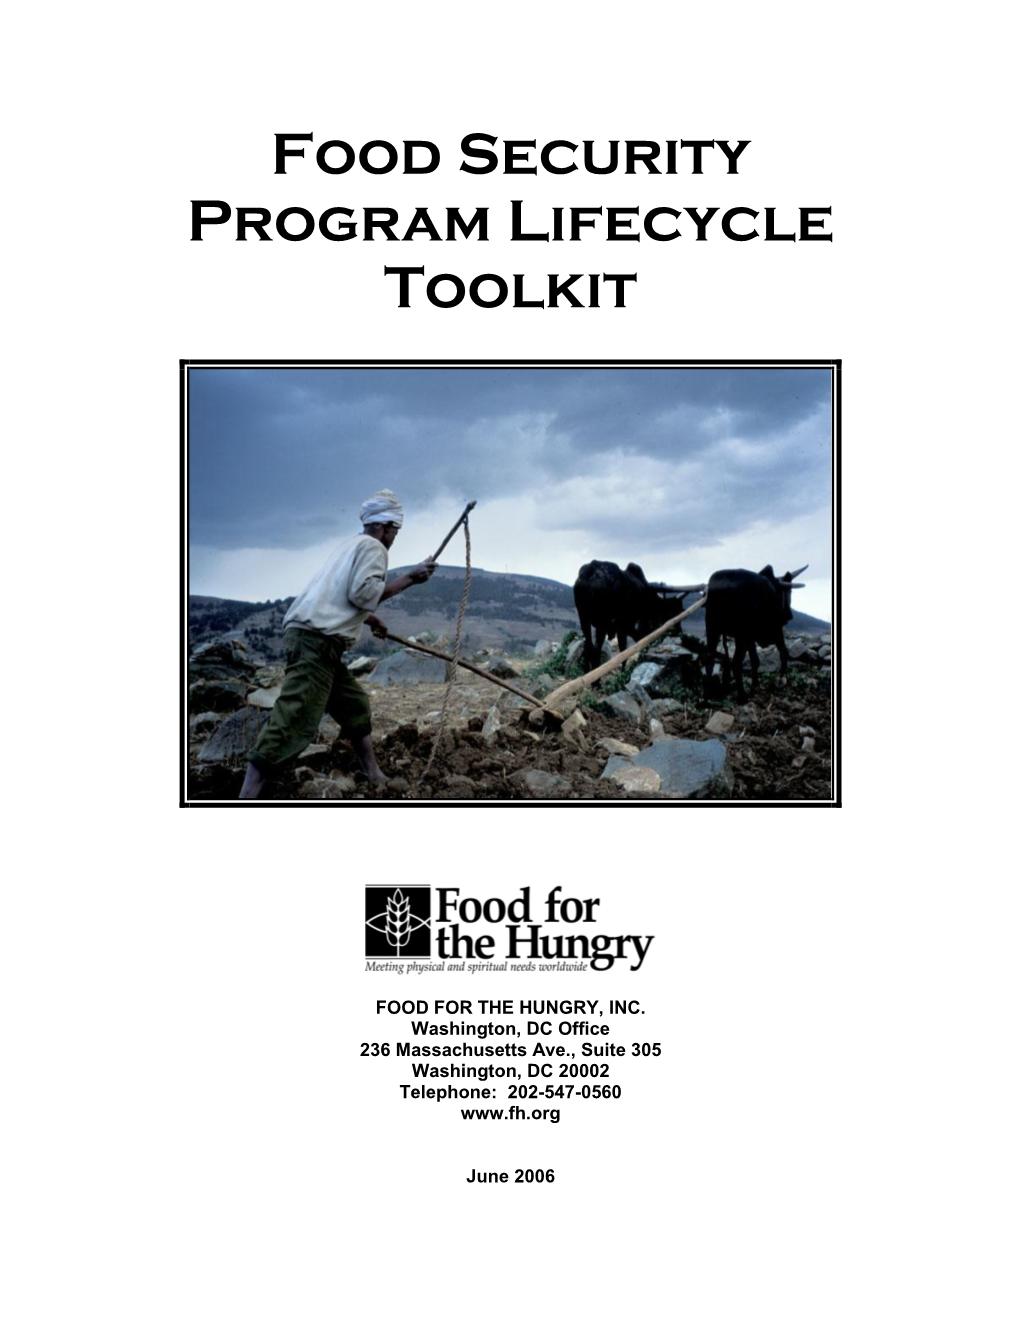 Food Security Program Lifecycle Toolkit Manual Draft